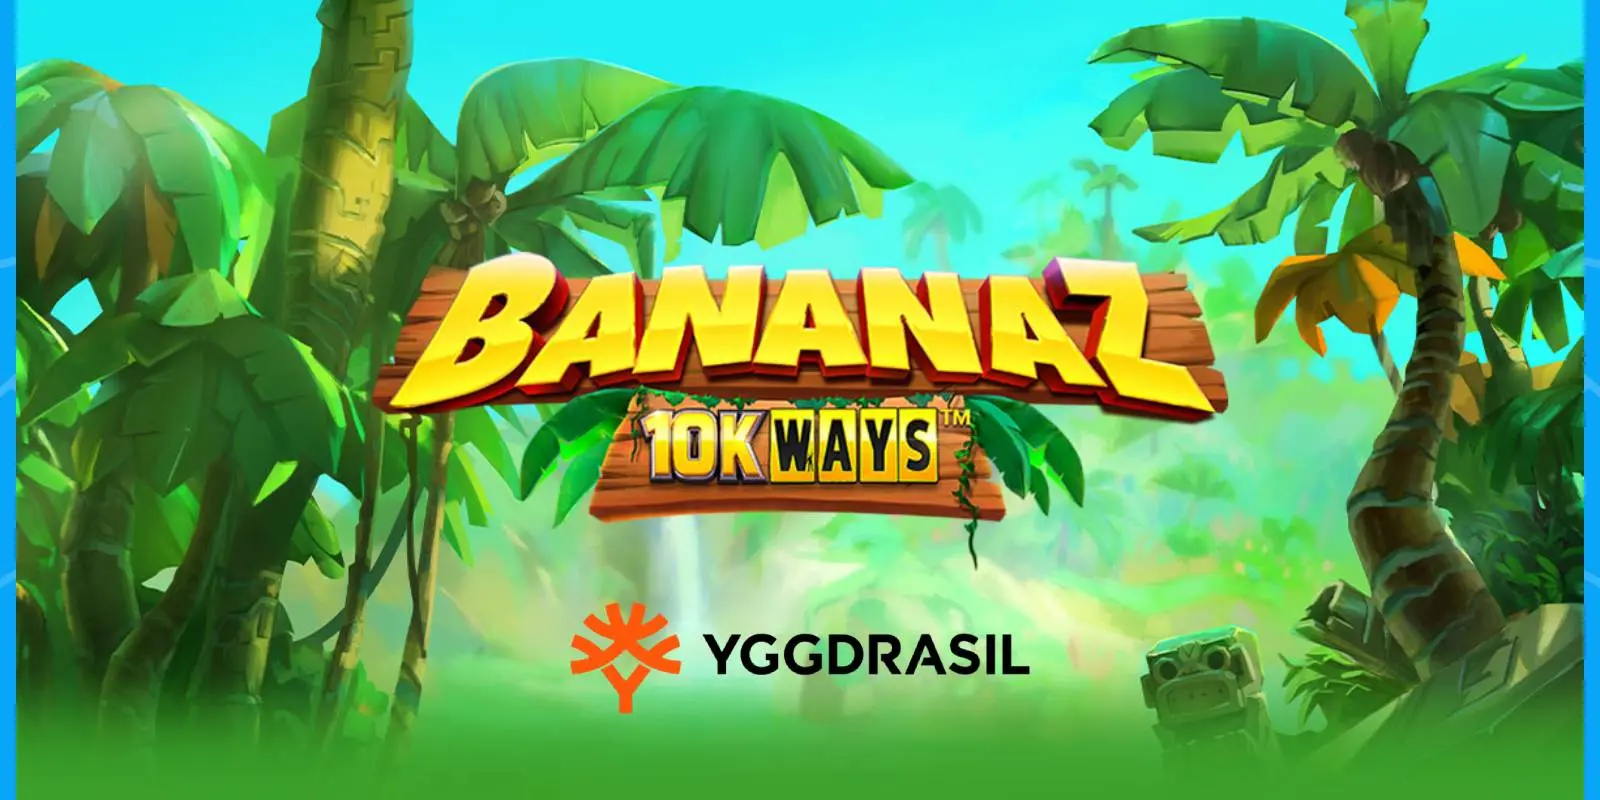 BananaZ 10k Ways